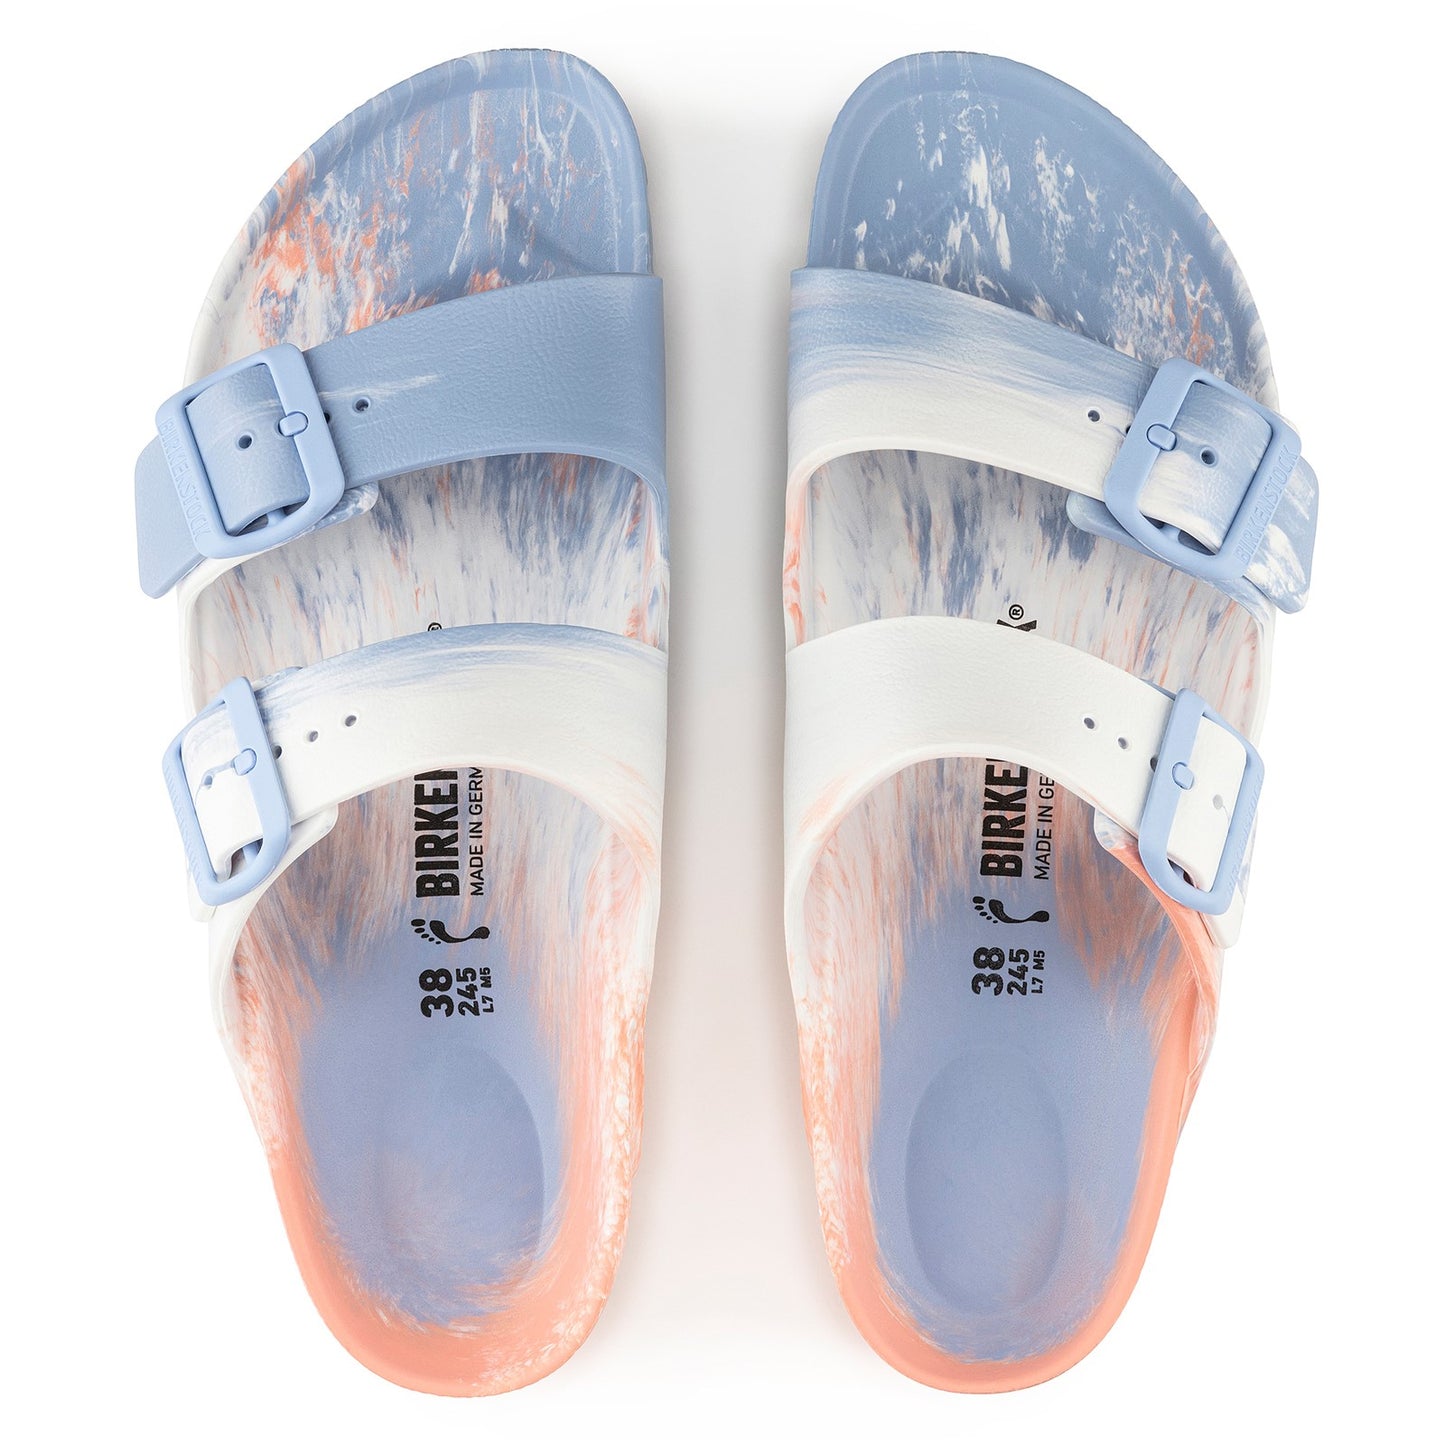 Peltz Shoes  Women's Birkenstock Arizona Essentials EVA Slide WHITE BLUE PEACH 1022 447 N